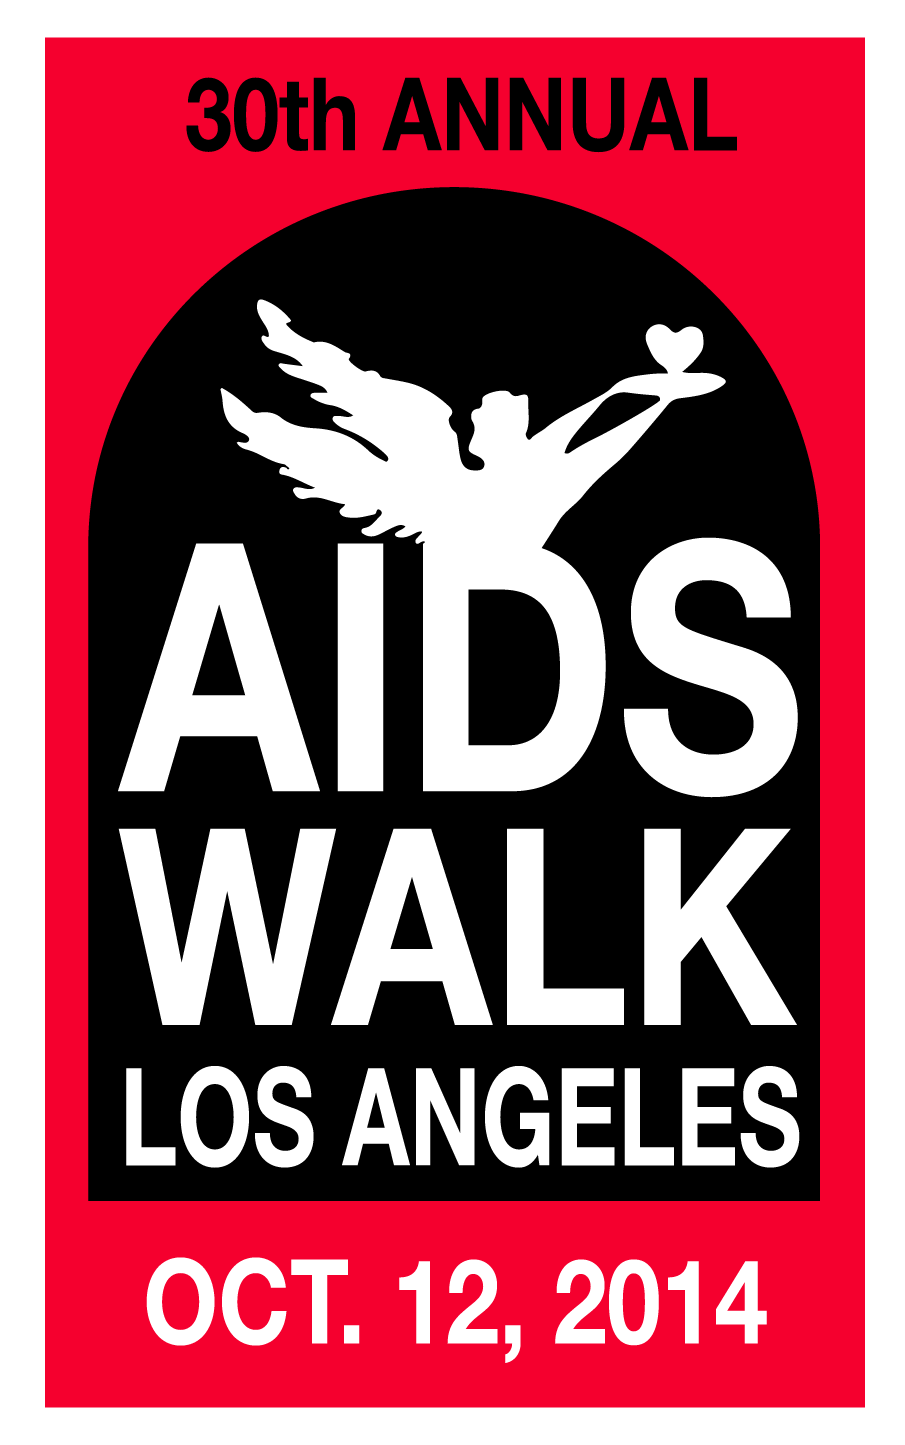 PAF AIDS WALK 2014